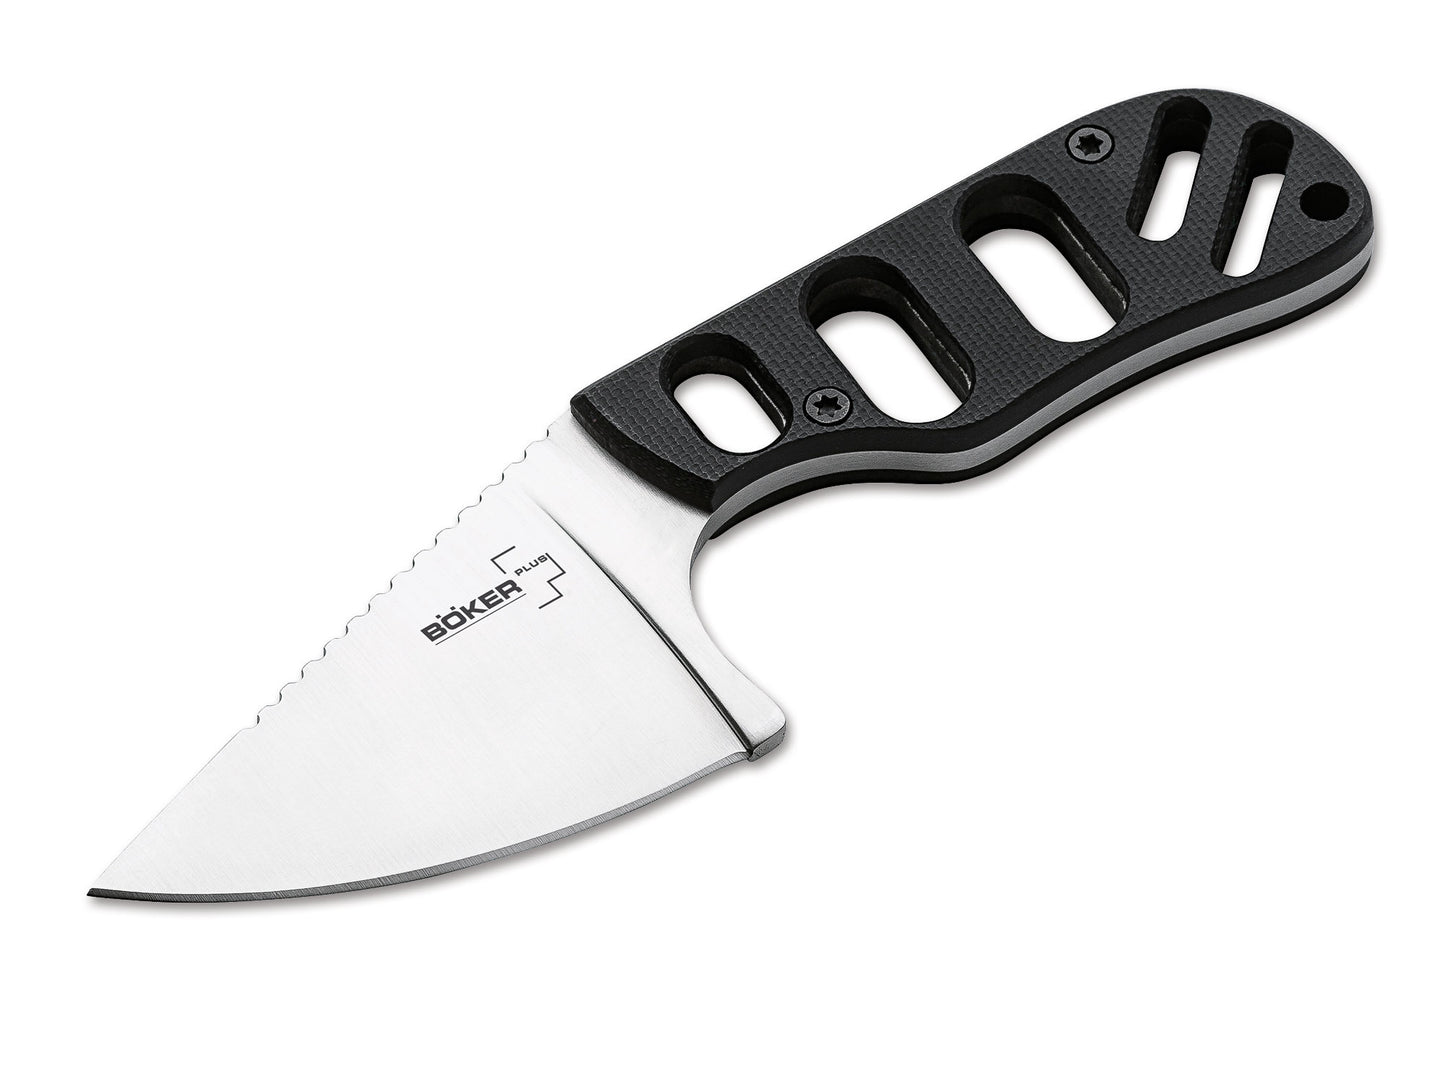 Boker Plus SFB 2.1" 440C G10 Compact Neck Knife with Kydex Sheath - Chad Los Banos Design 02BO321